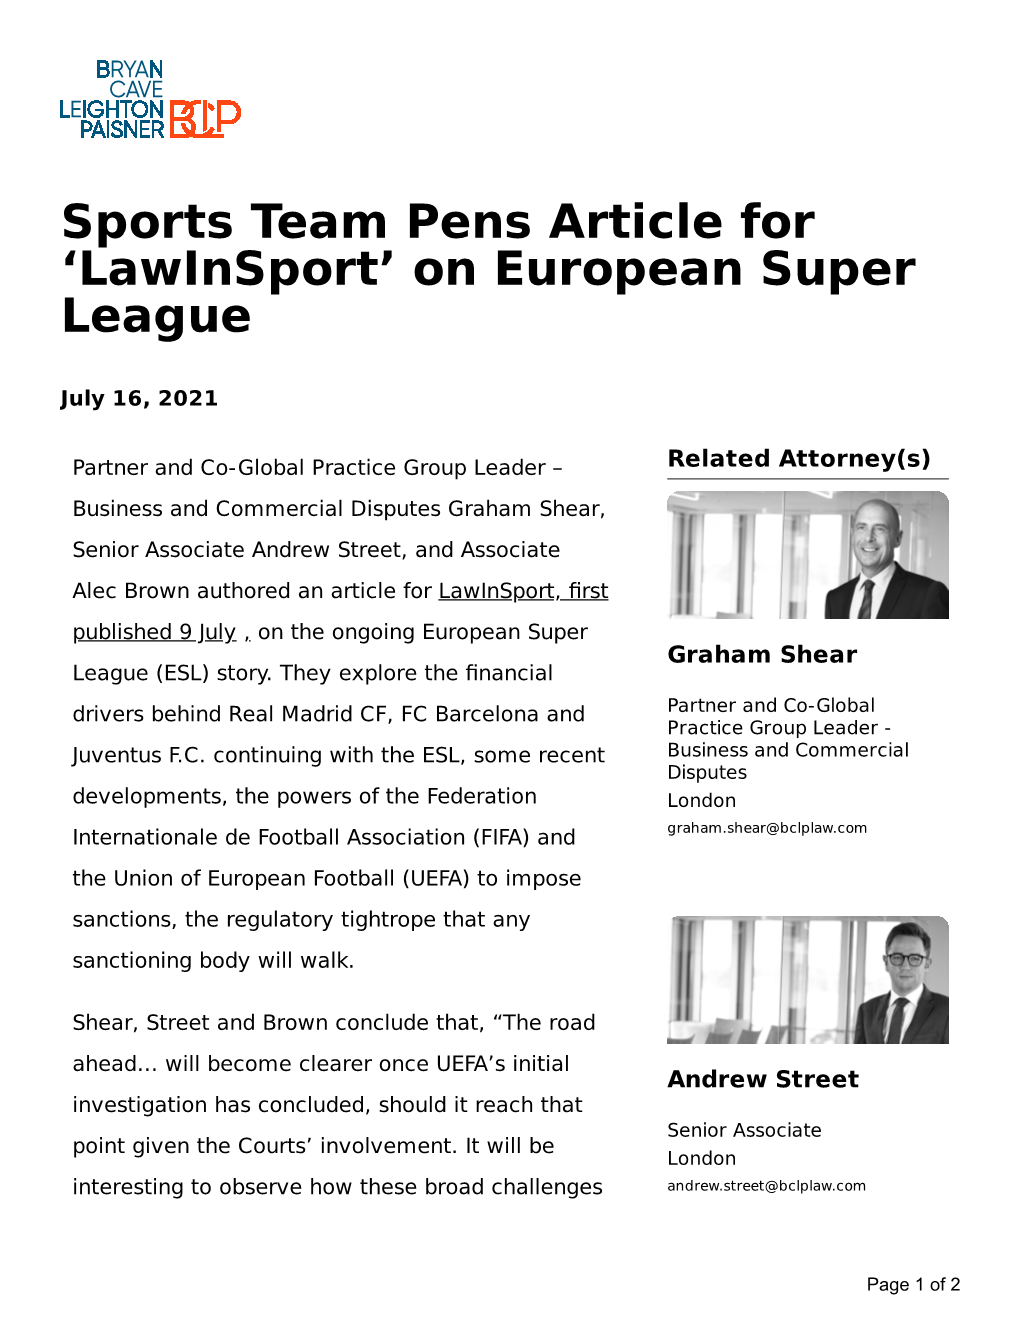 'Lawinsport' on European Super League